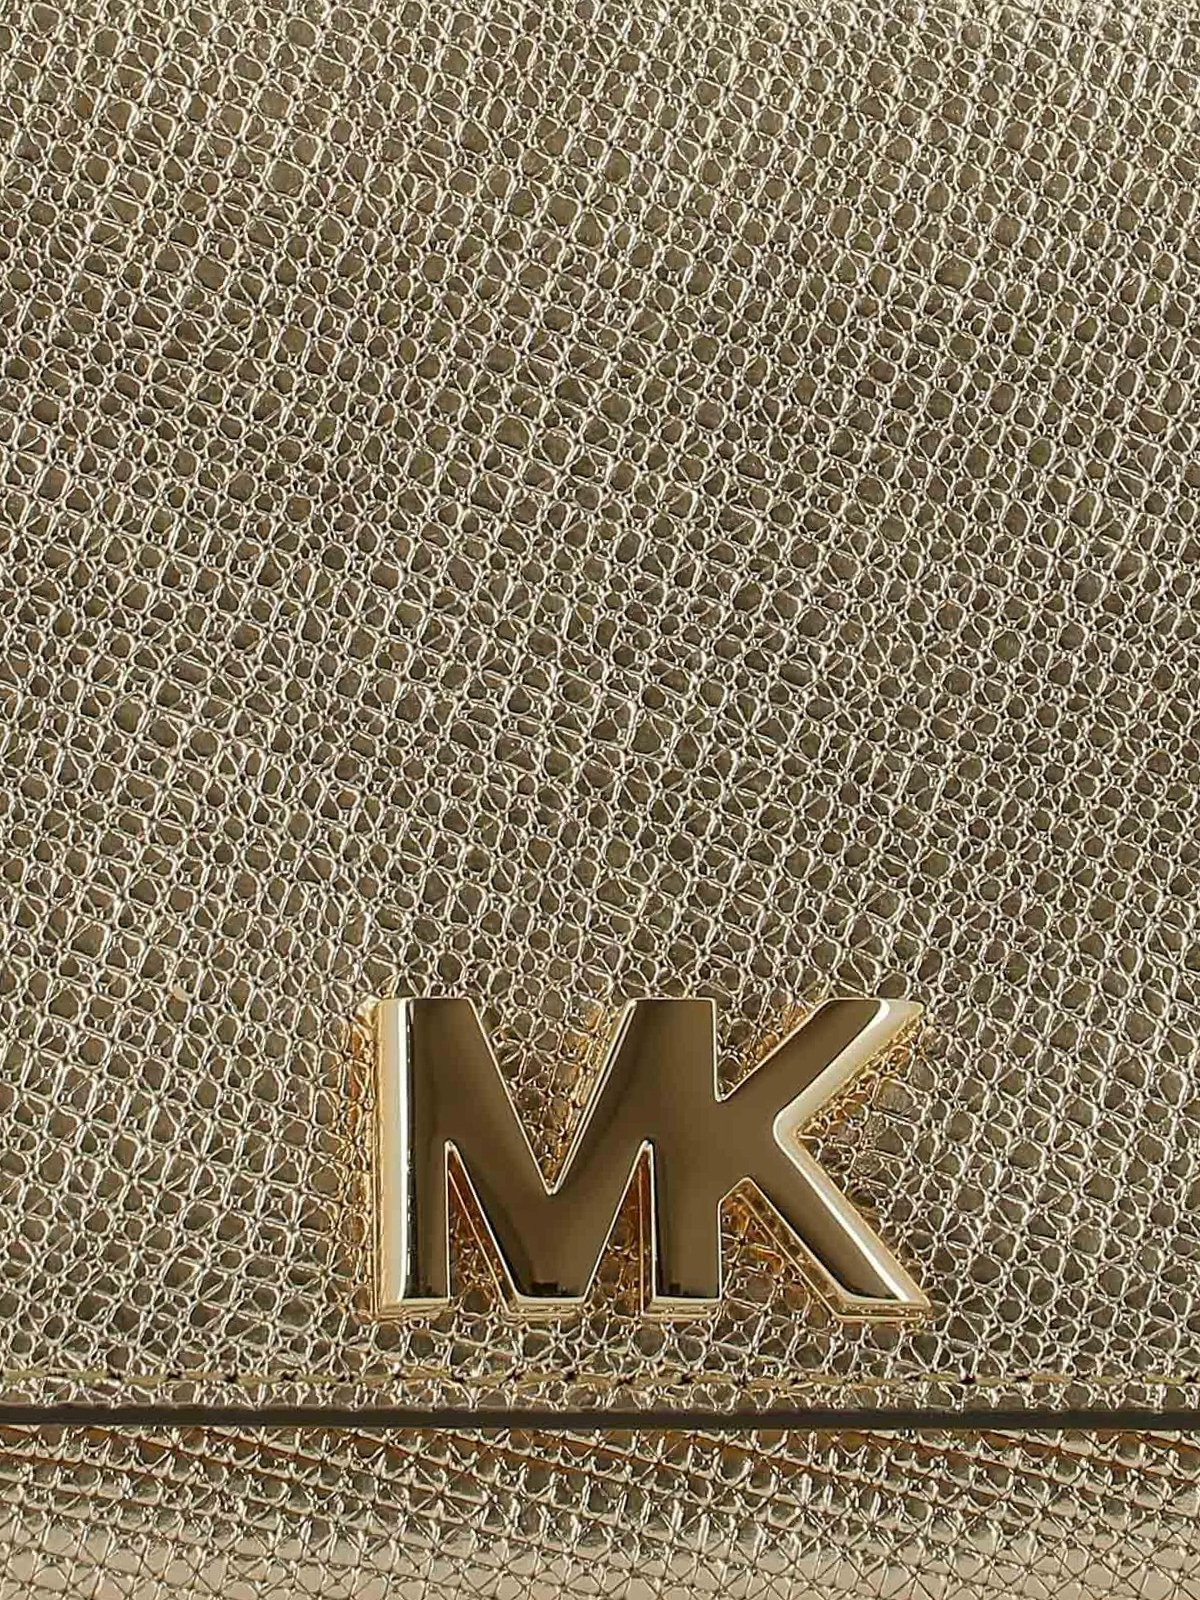 michael kors gold logo